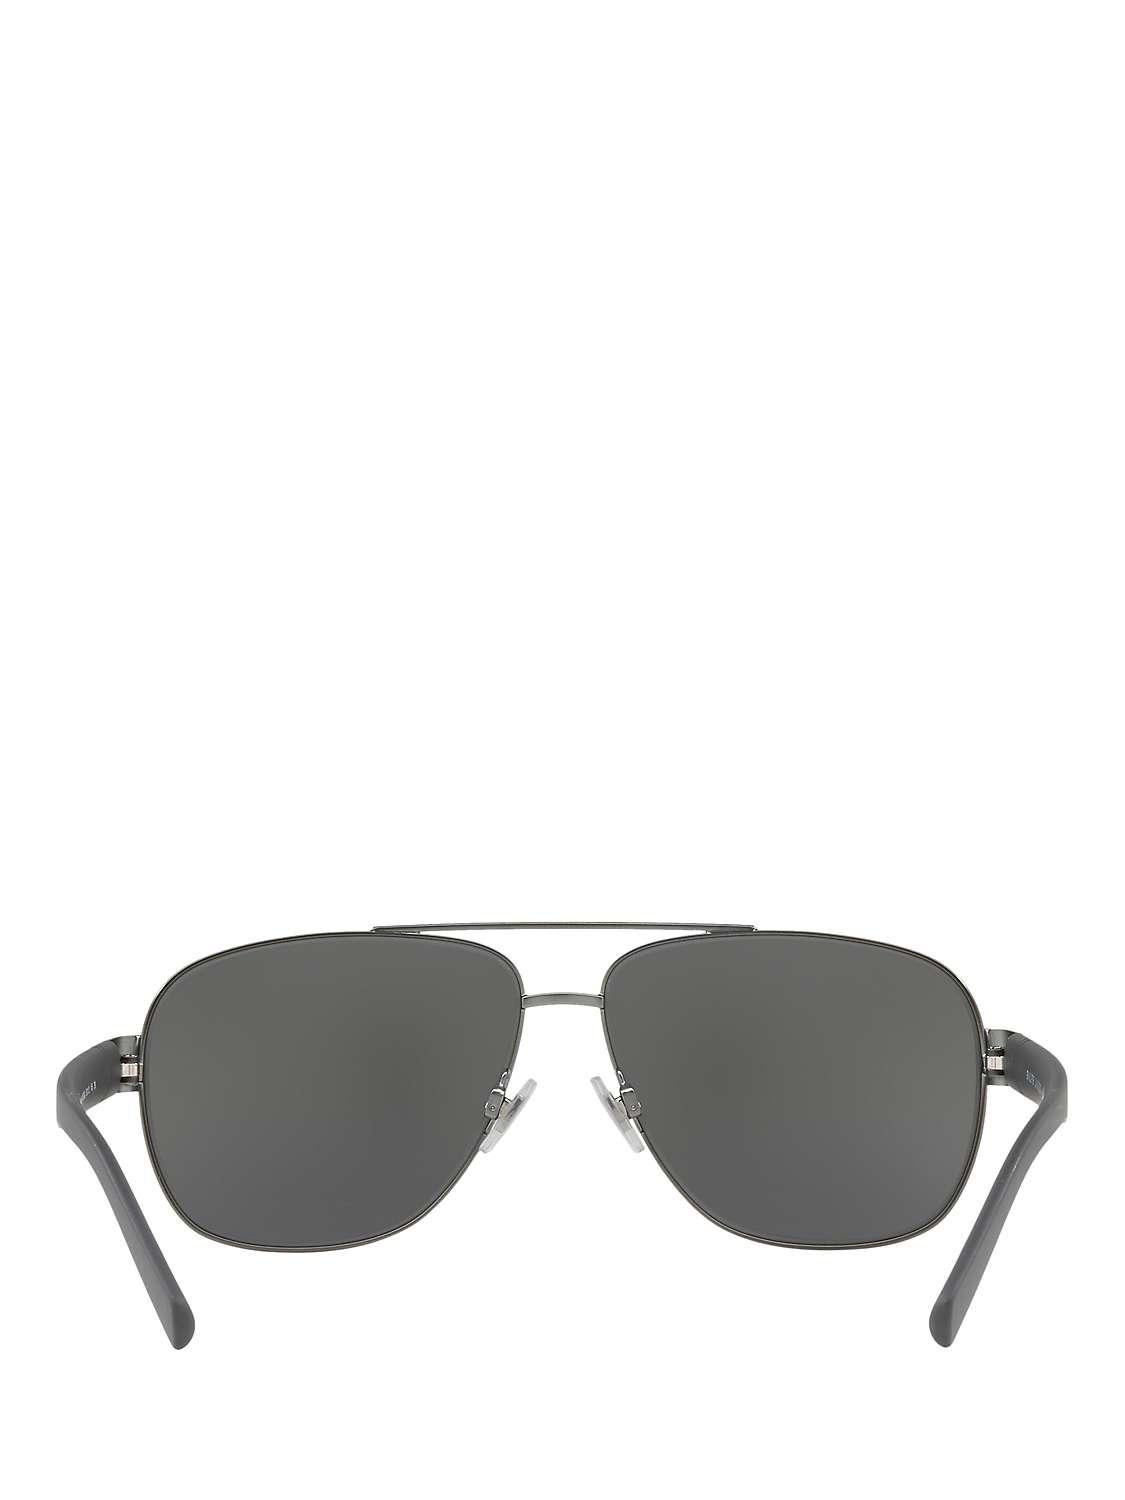 Buy Polo Ralph Lauren PH3110 Men's Aviator Sunglasses, Charcoal/Mirror Silver Online at johnlewis.com